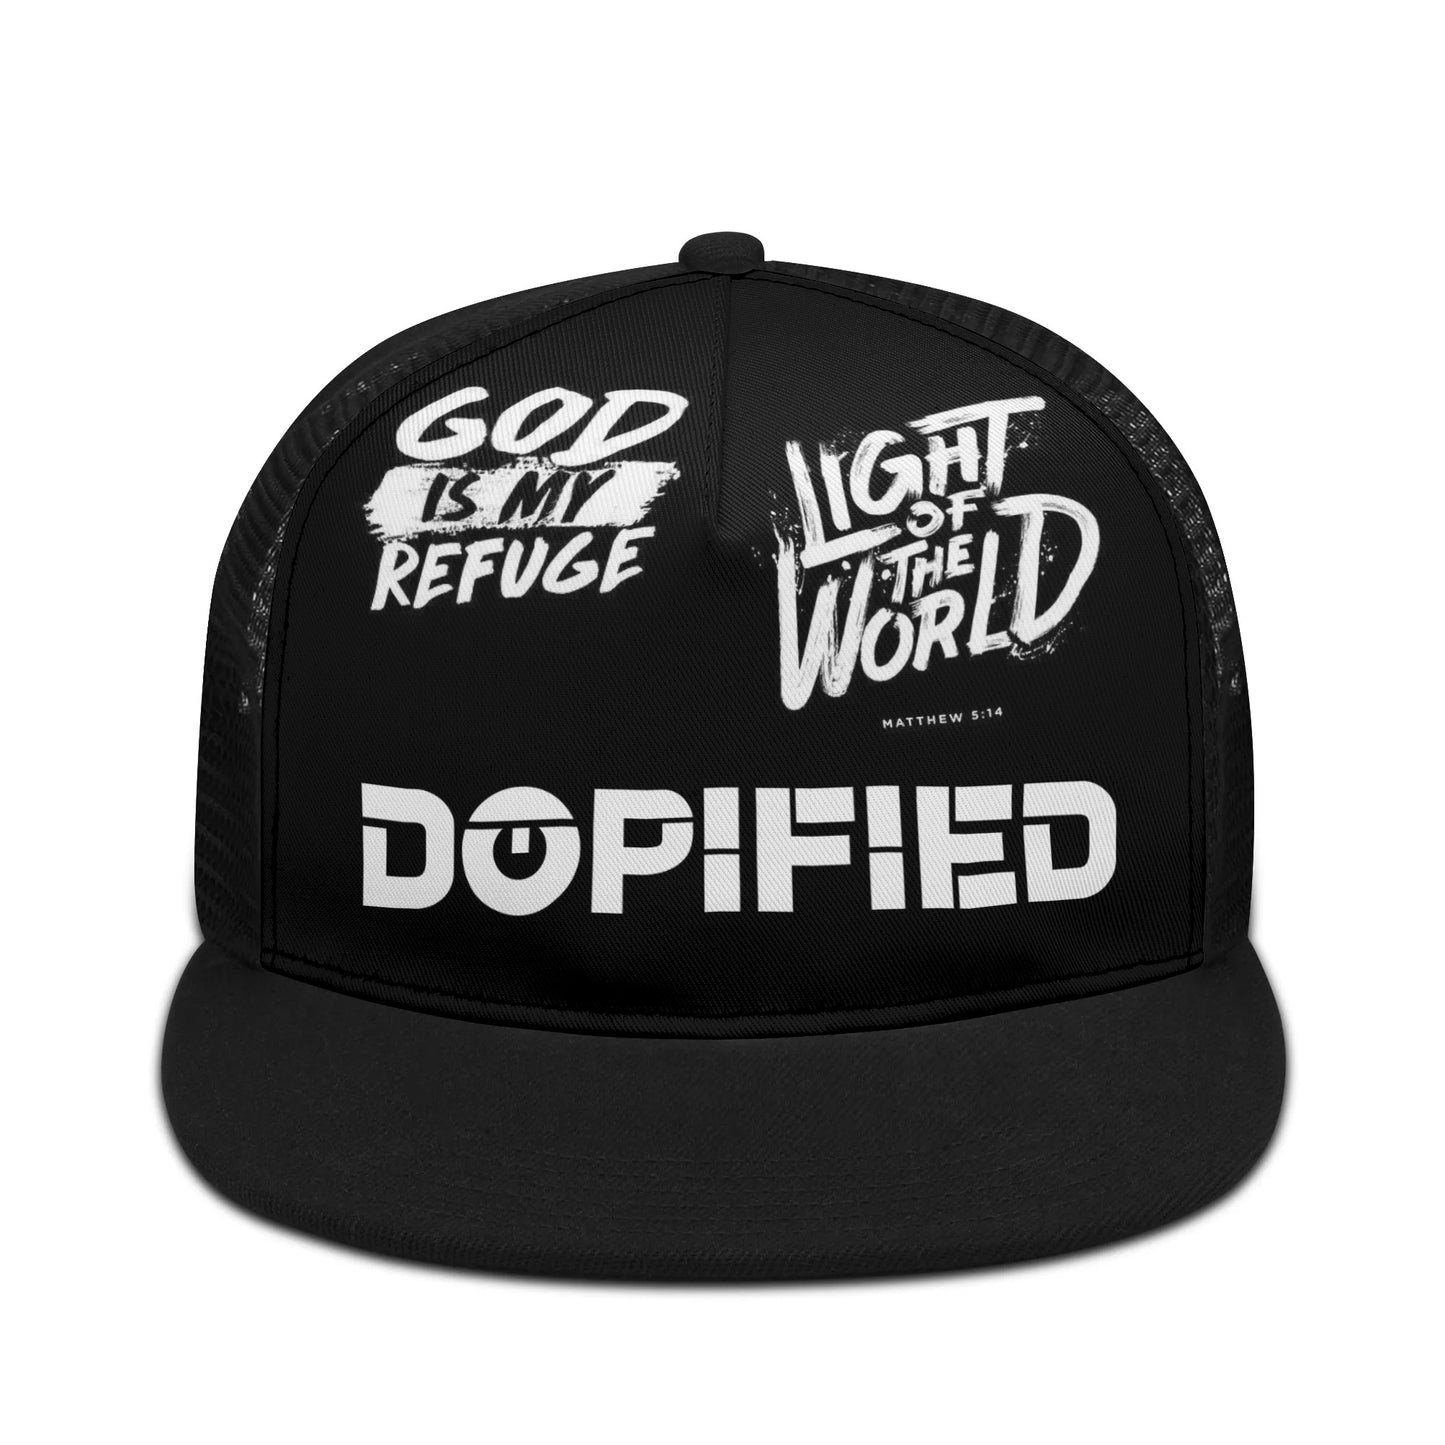 God is the light of the world Snapback Trucker Hat